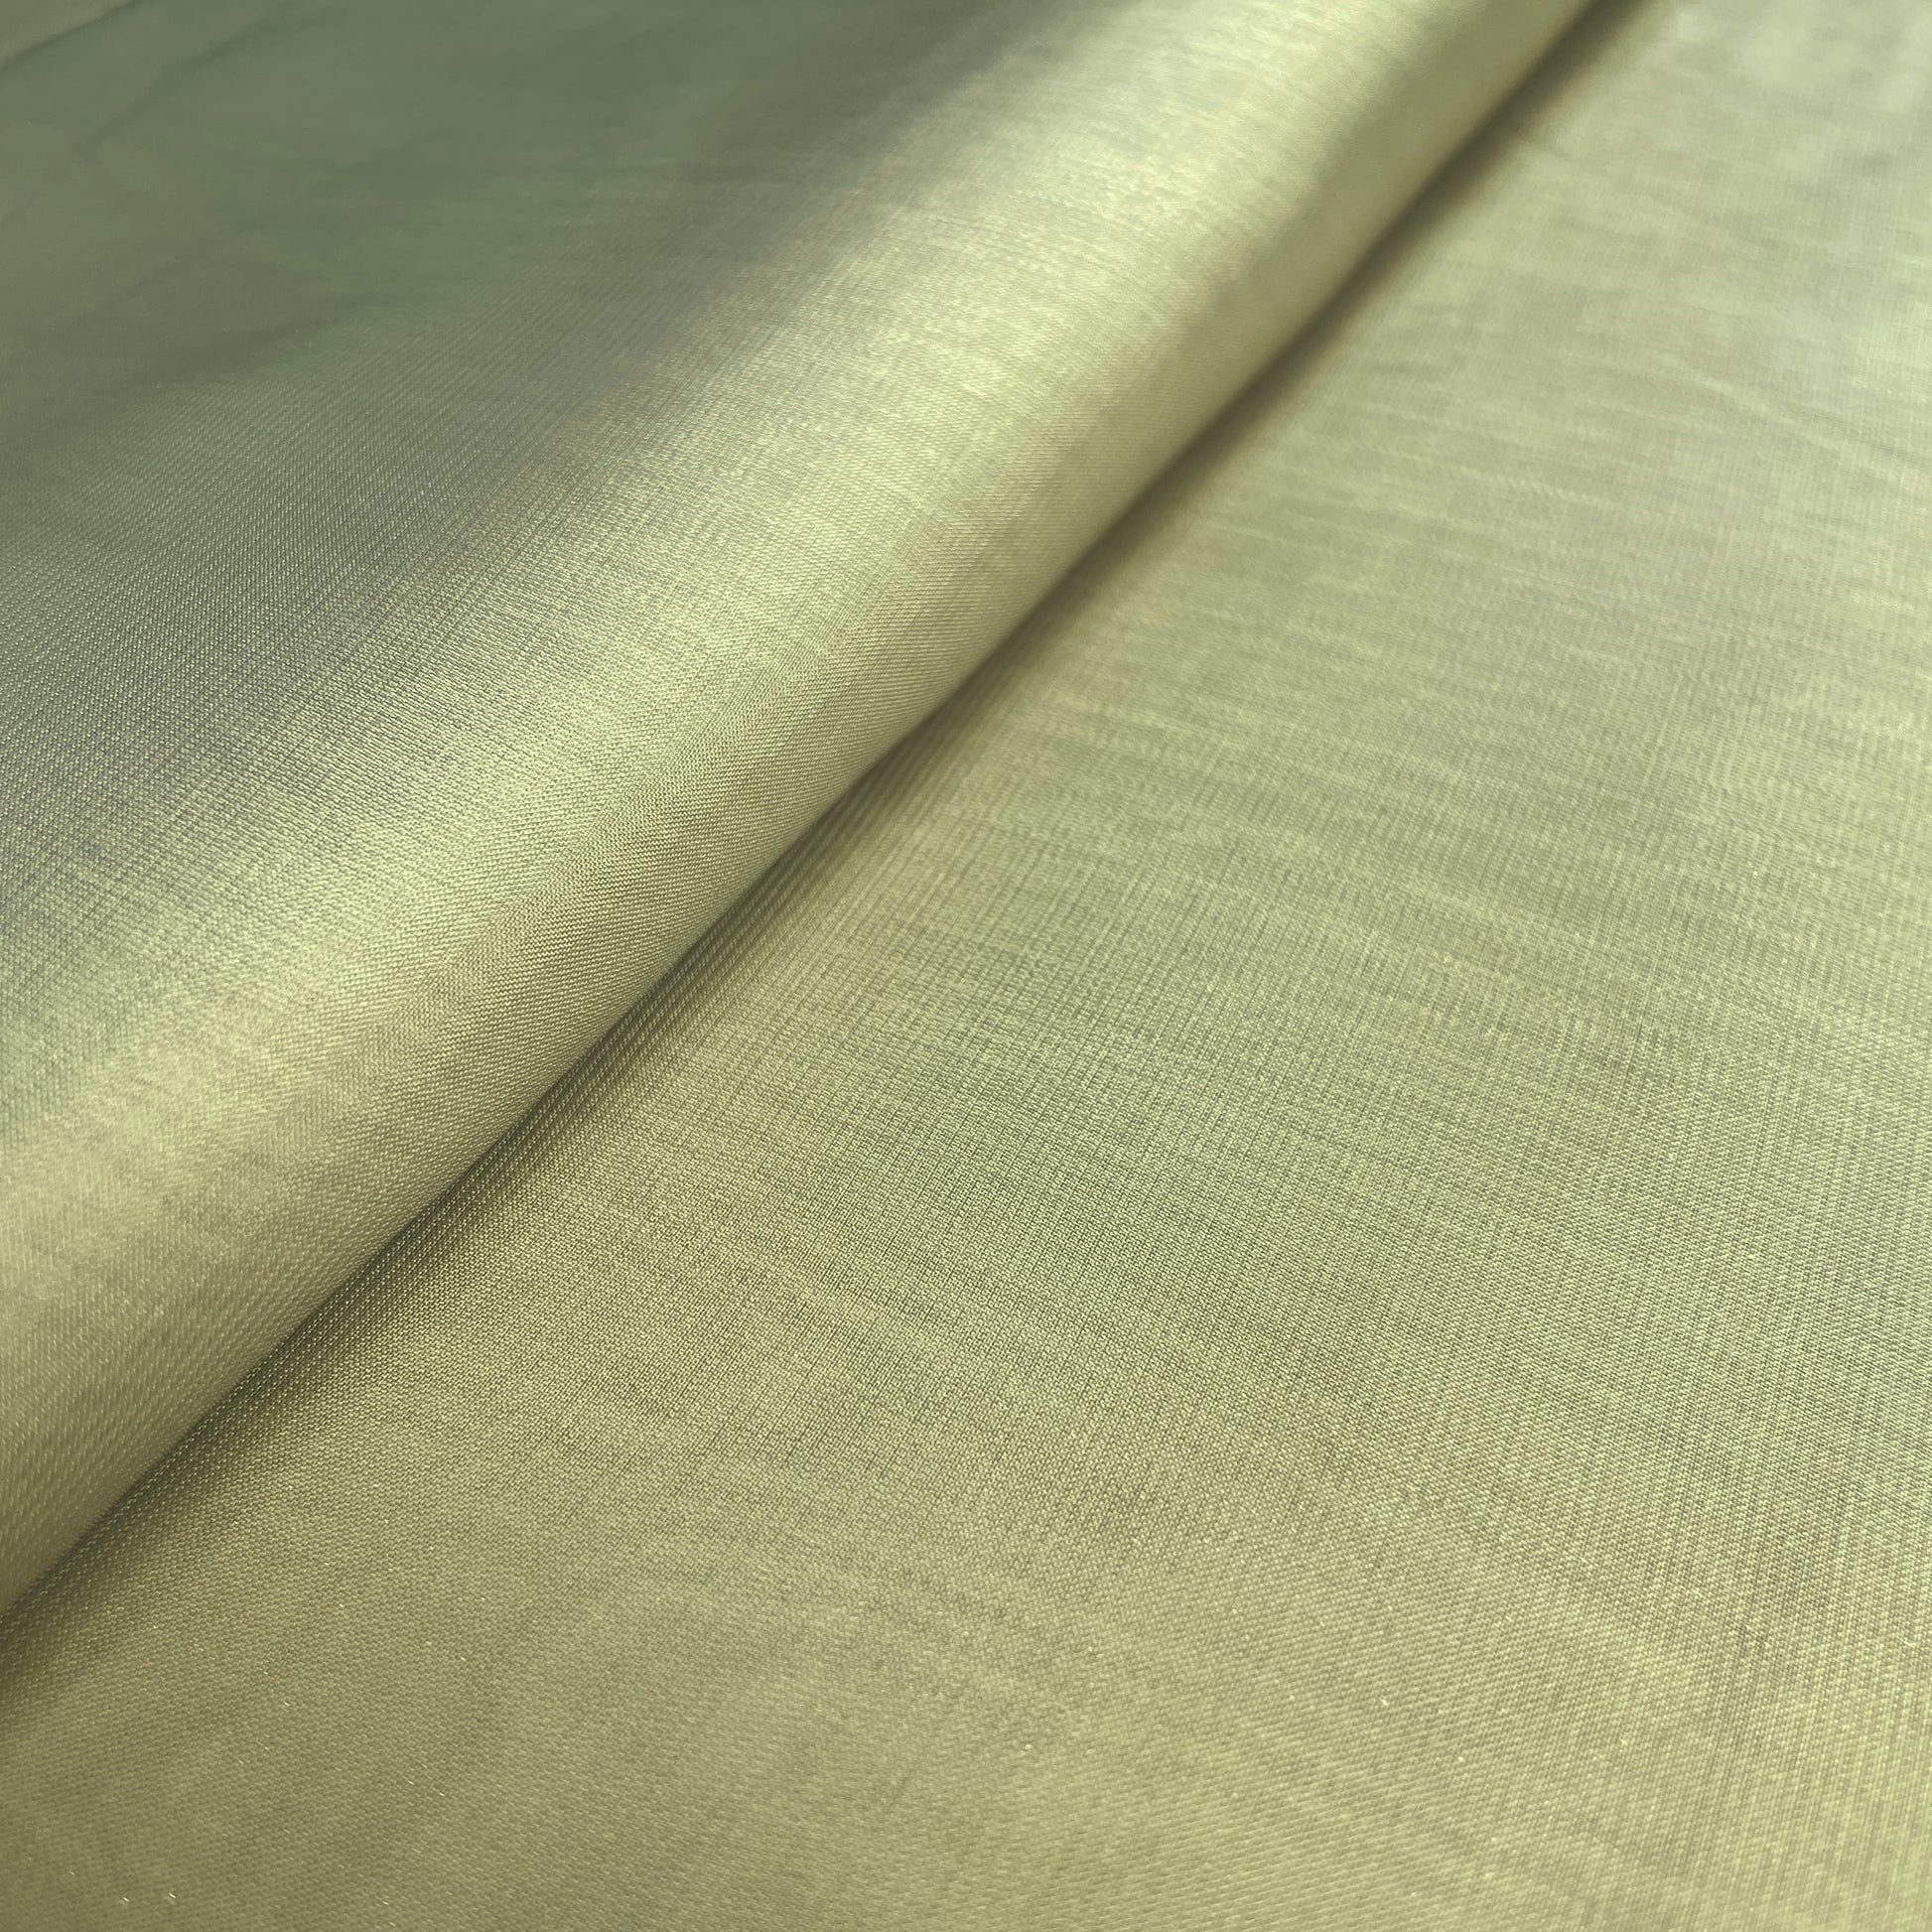 Premium Olive Green Solid Organza Satin Fabric